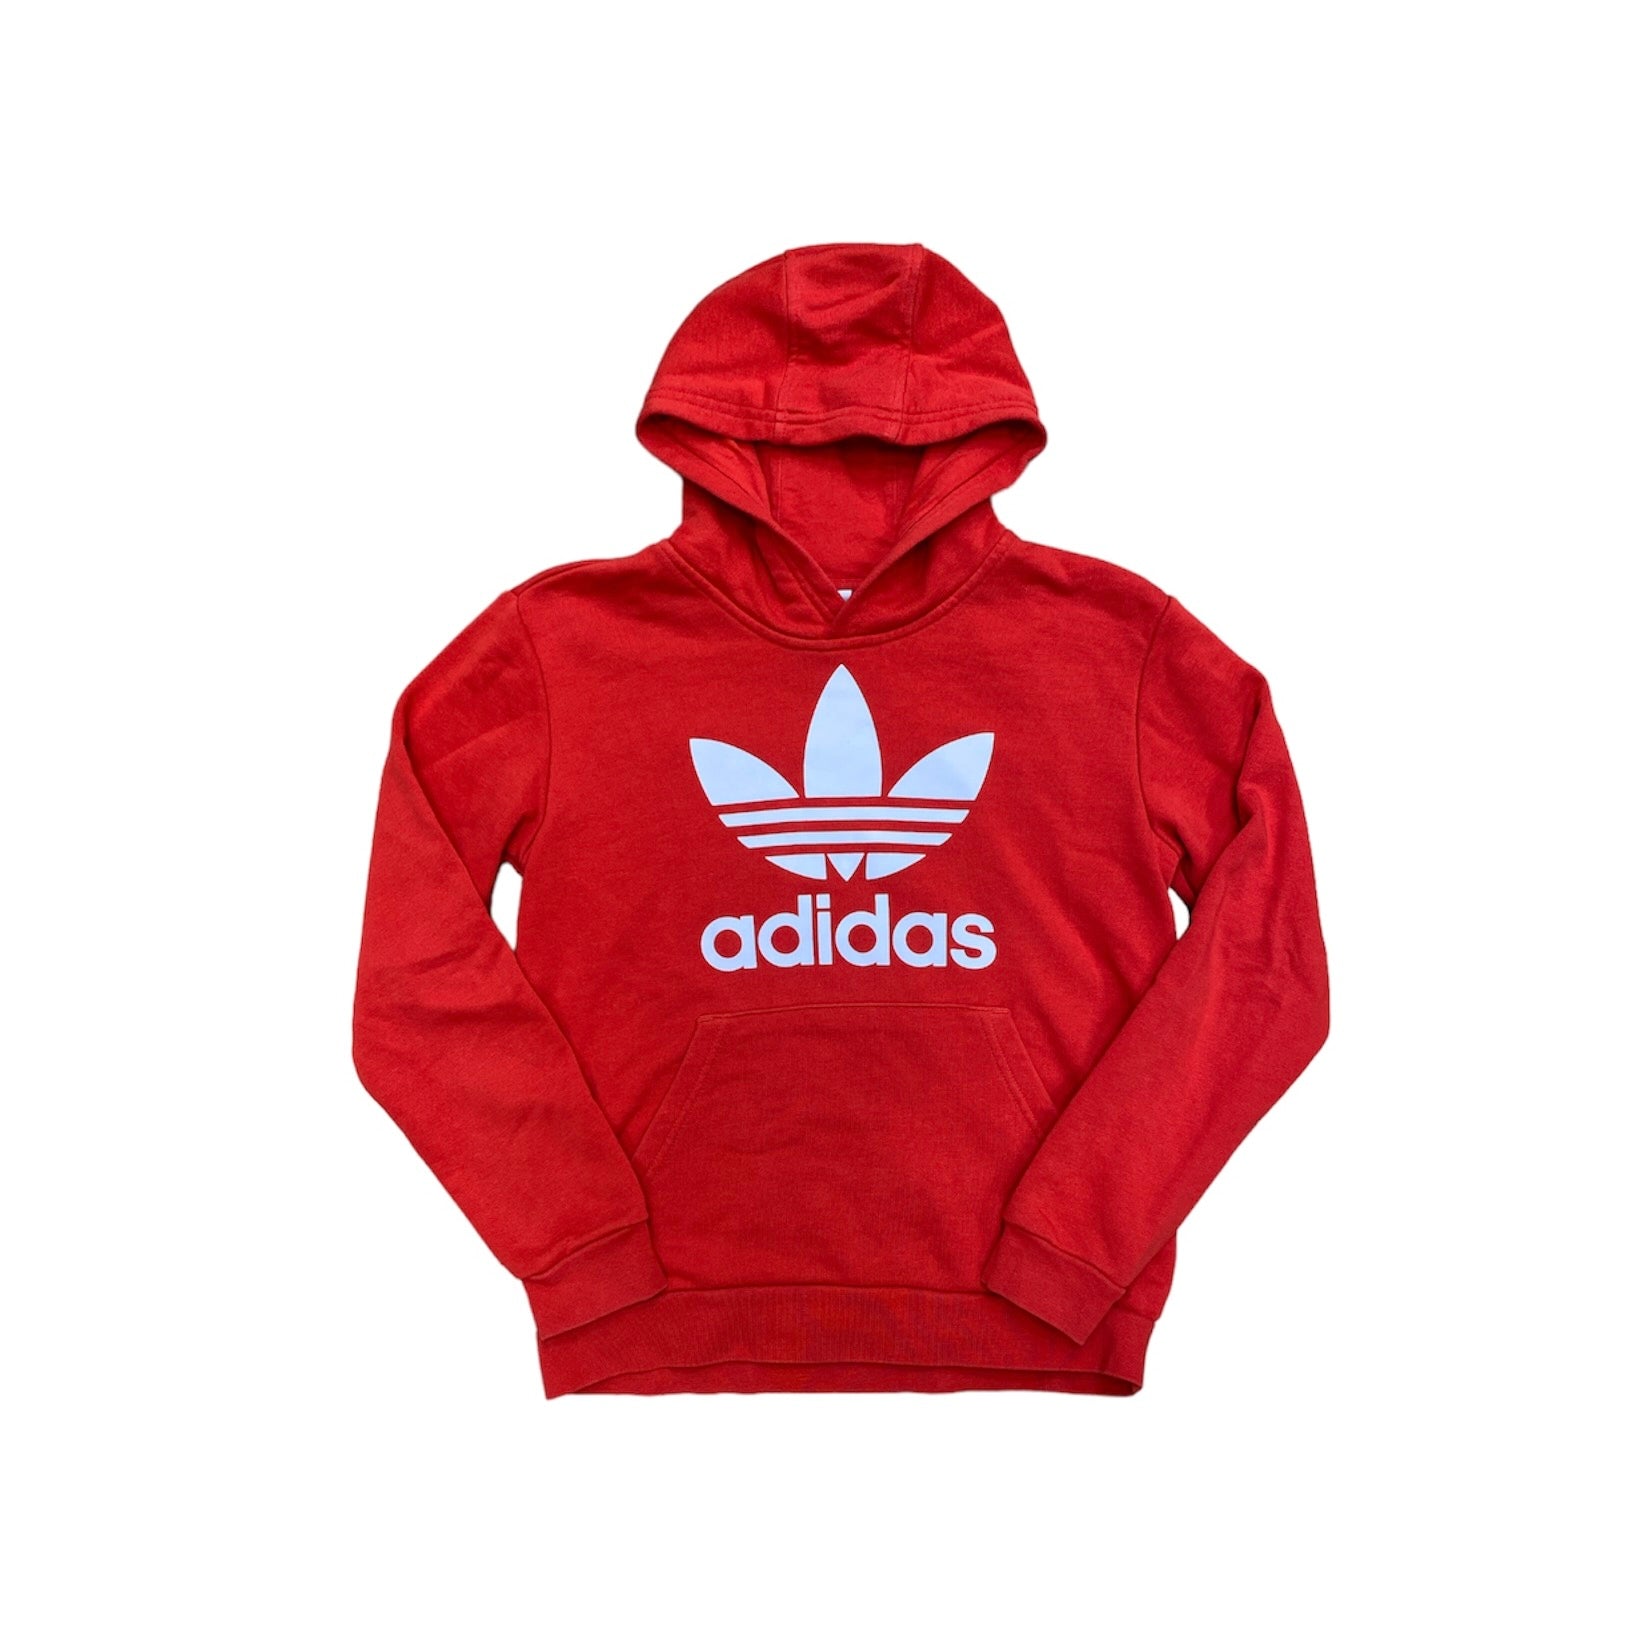 Adidas Kids Trefoil Red Hoodie (Youth)